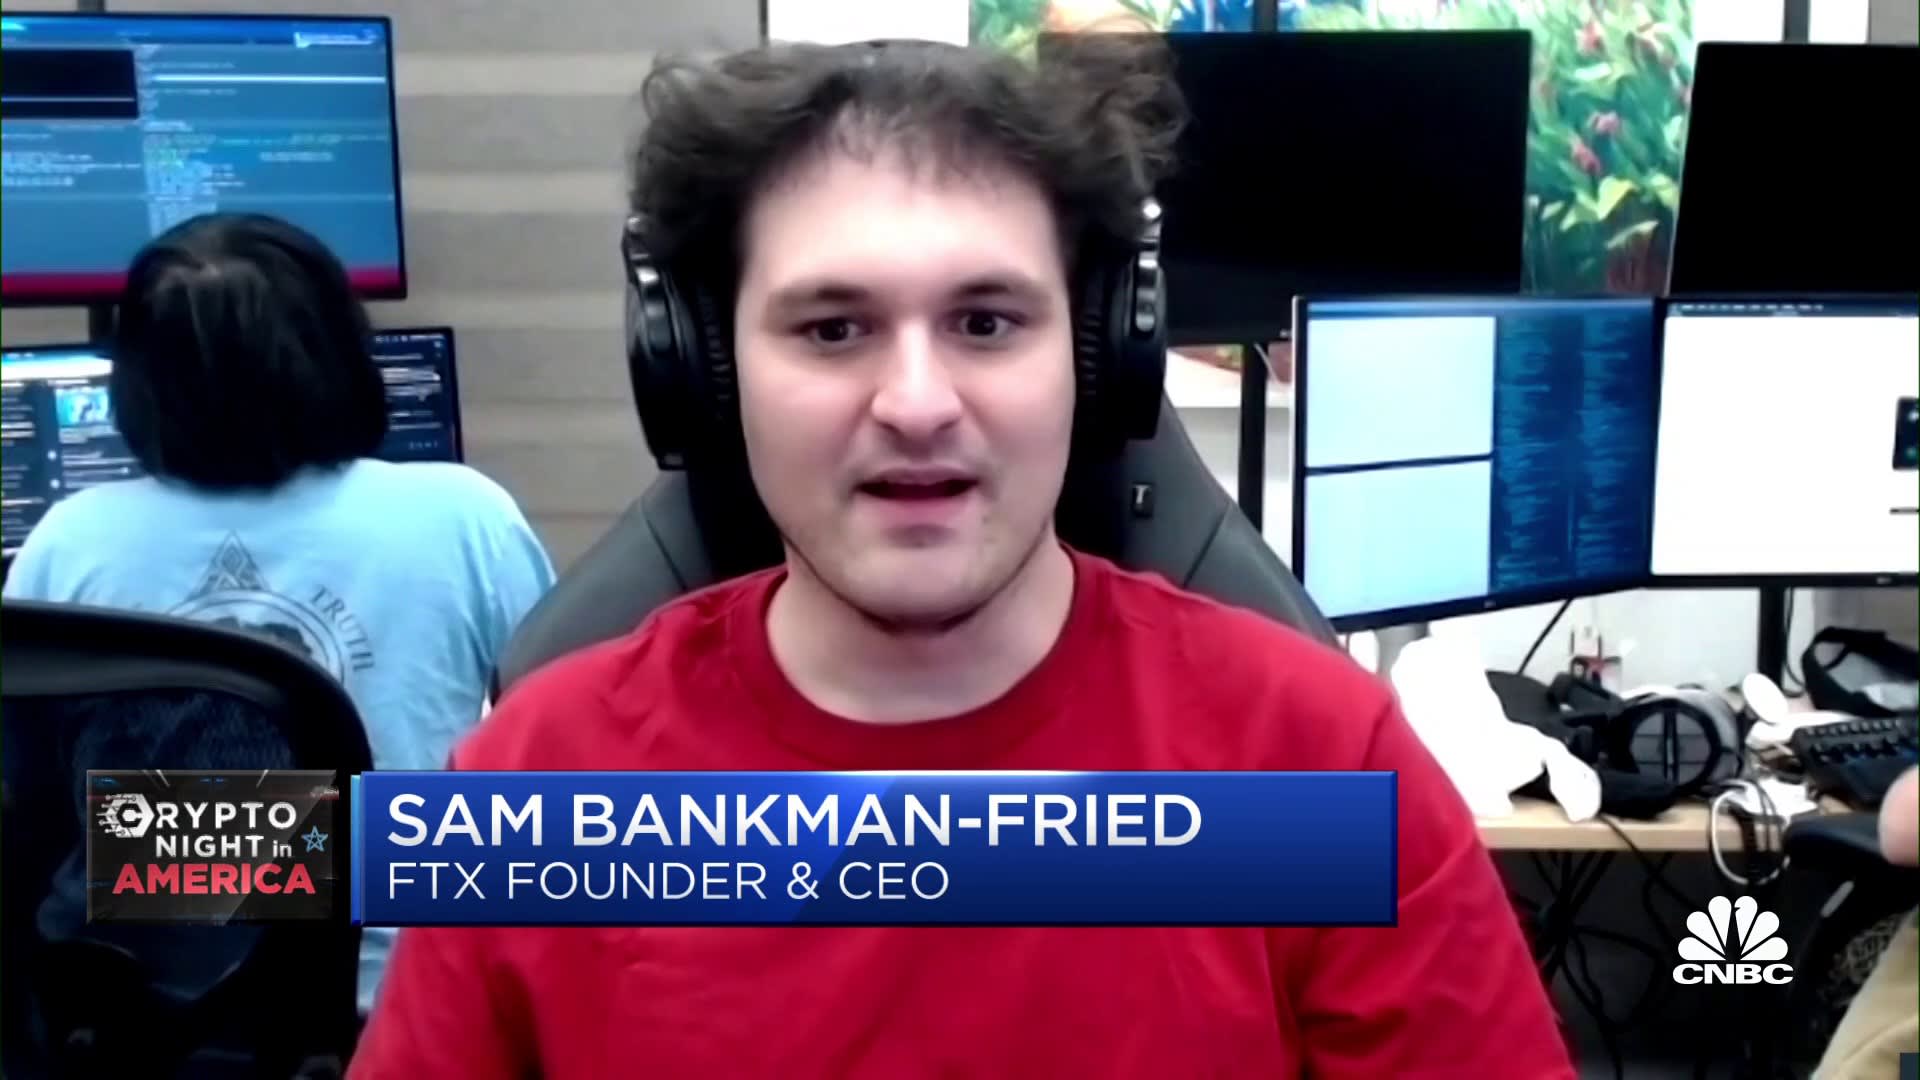 Sam bankman-fried